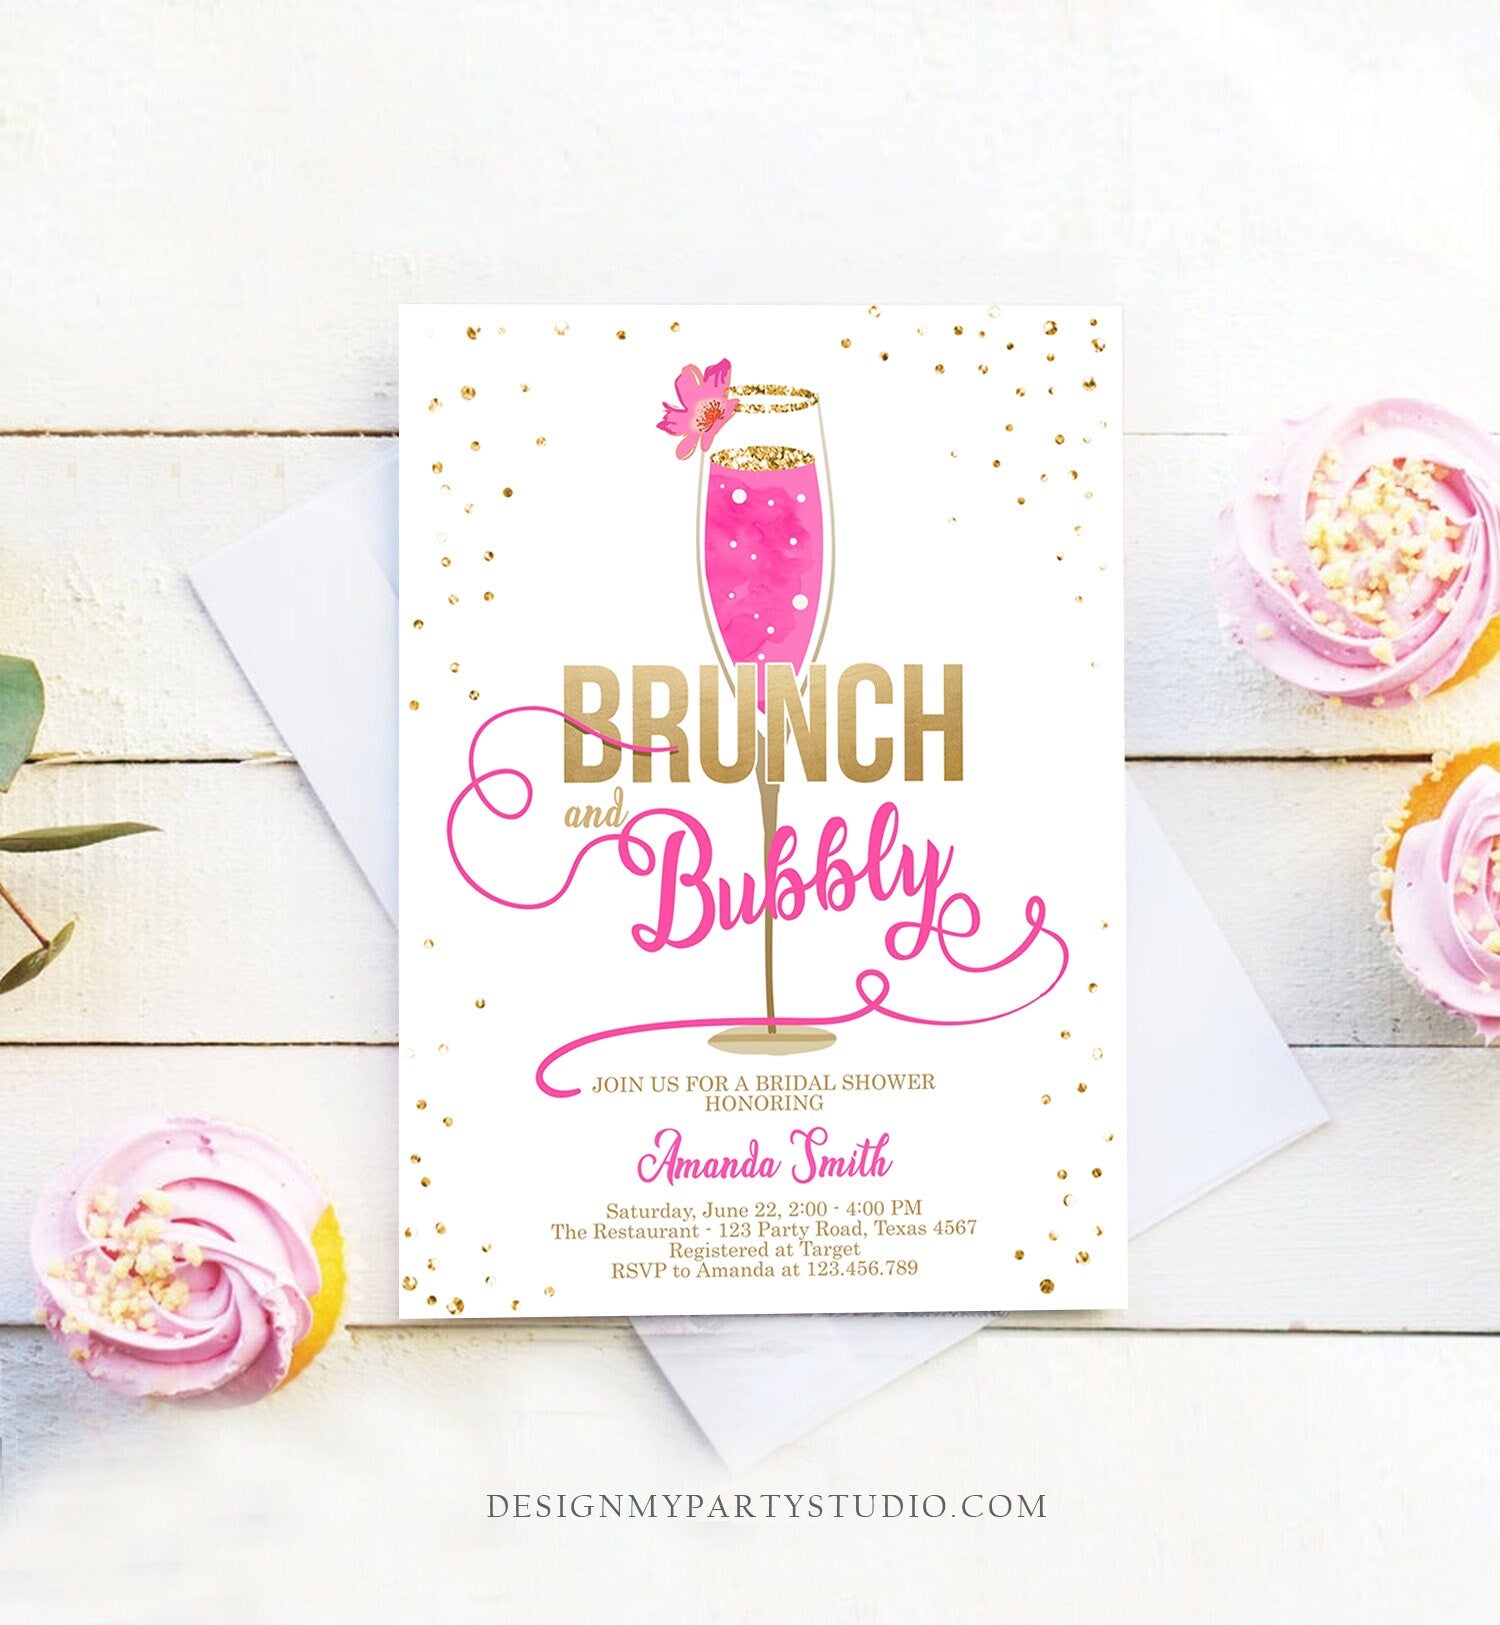 Editable Brunch and Bubbly Bridal Shower Invitation Floral Champagne Gold Hot Pink Wedding Download Printable Template Digital Corjl 0150